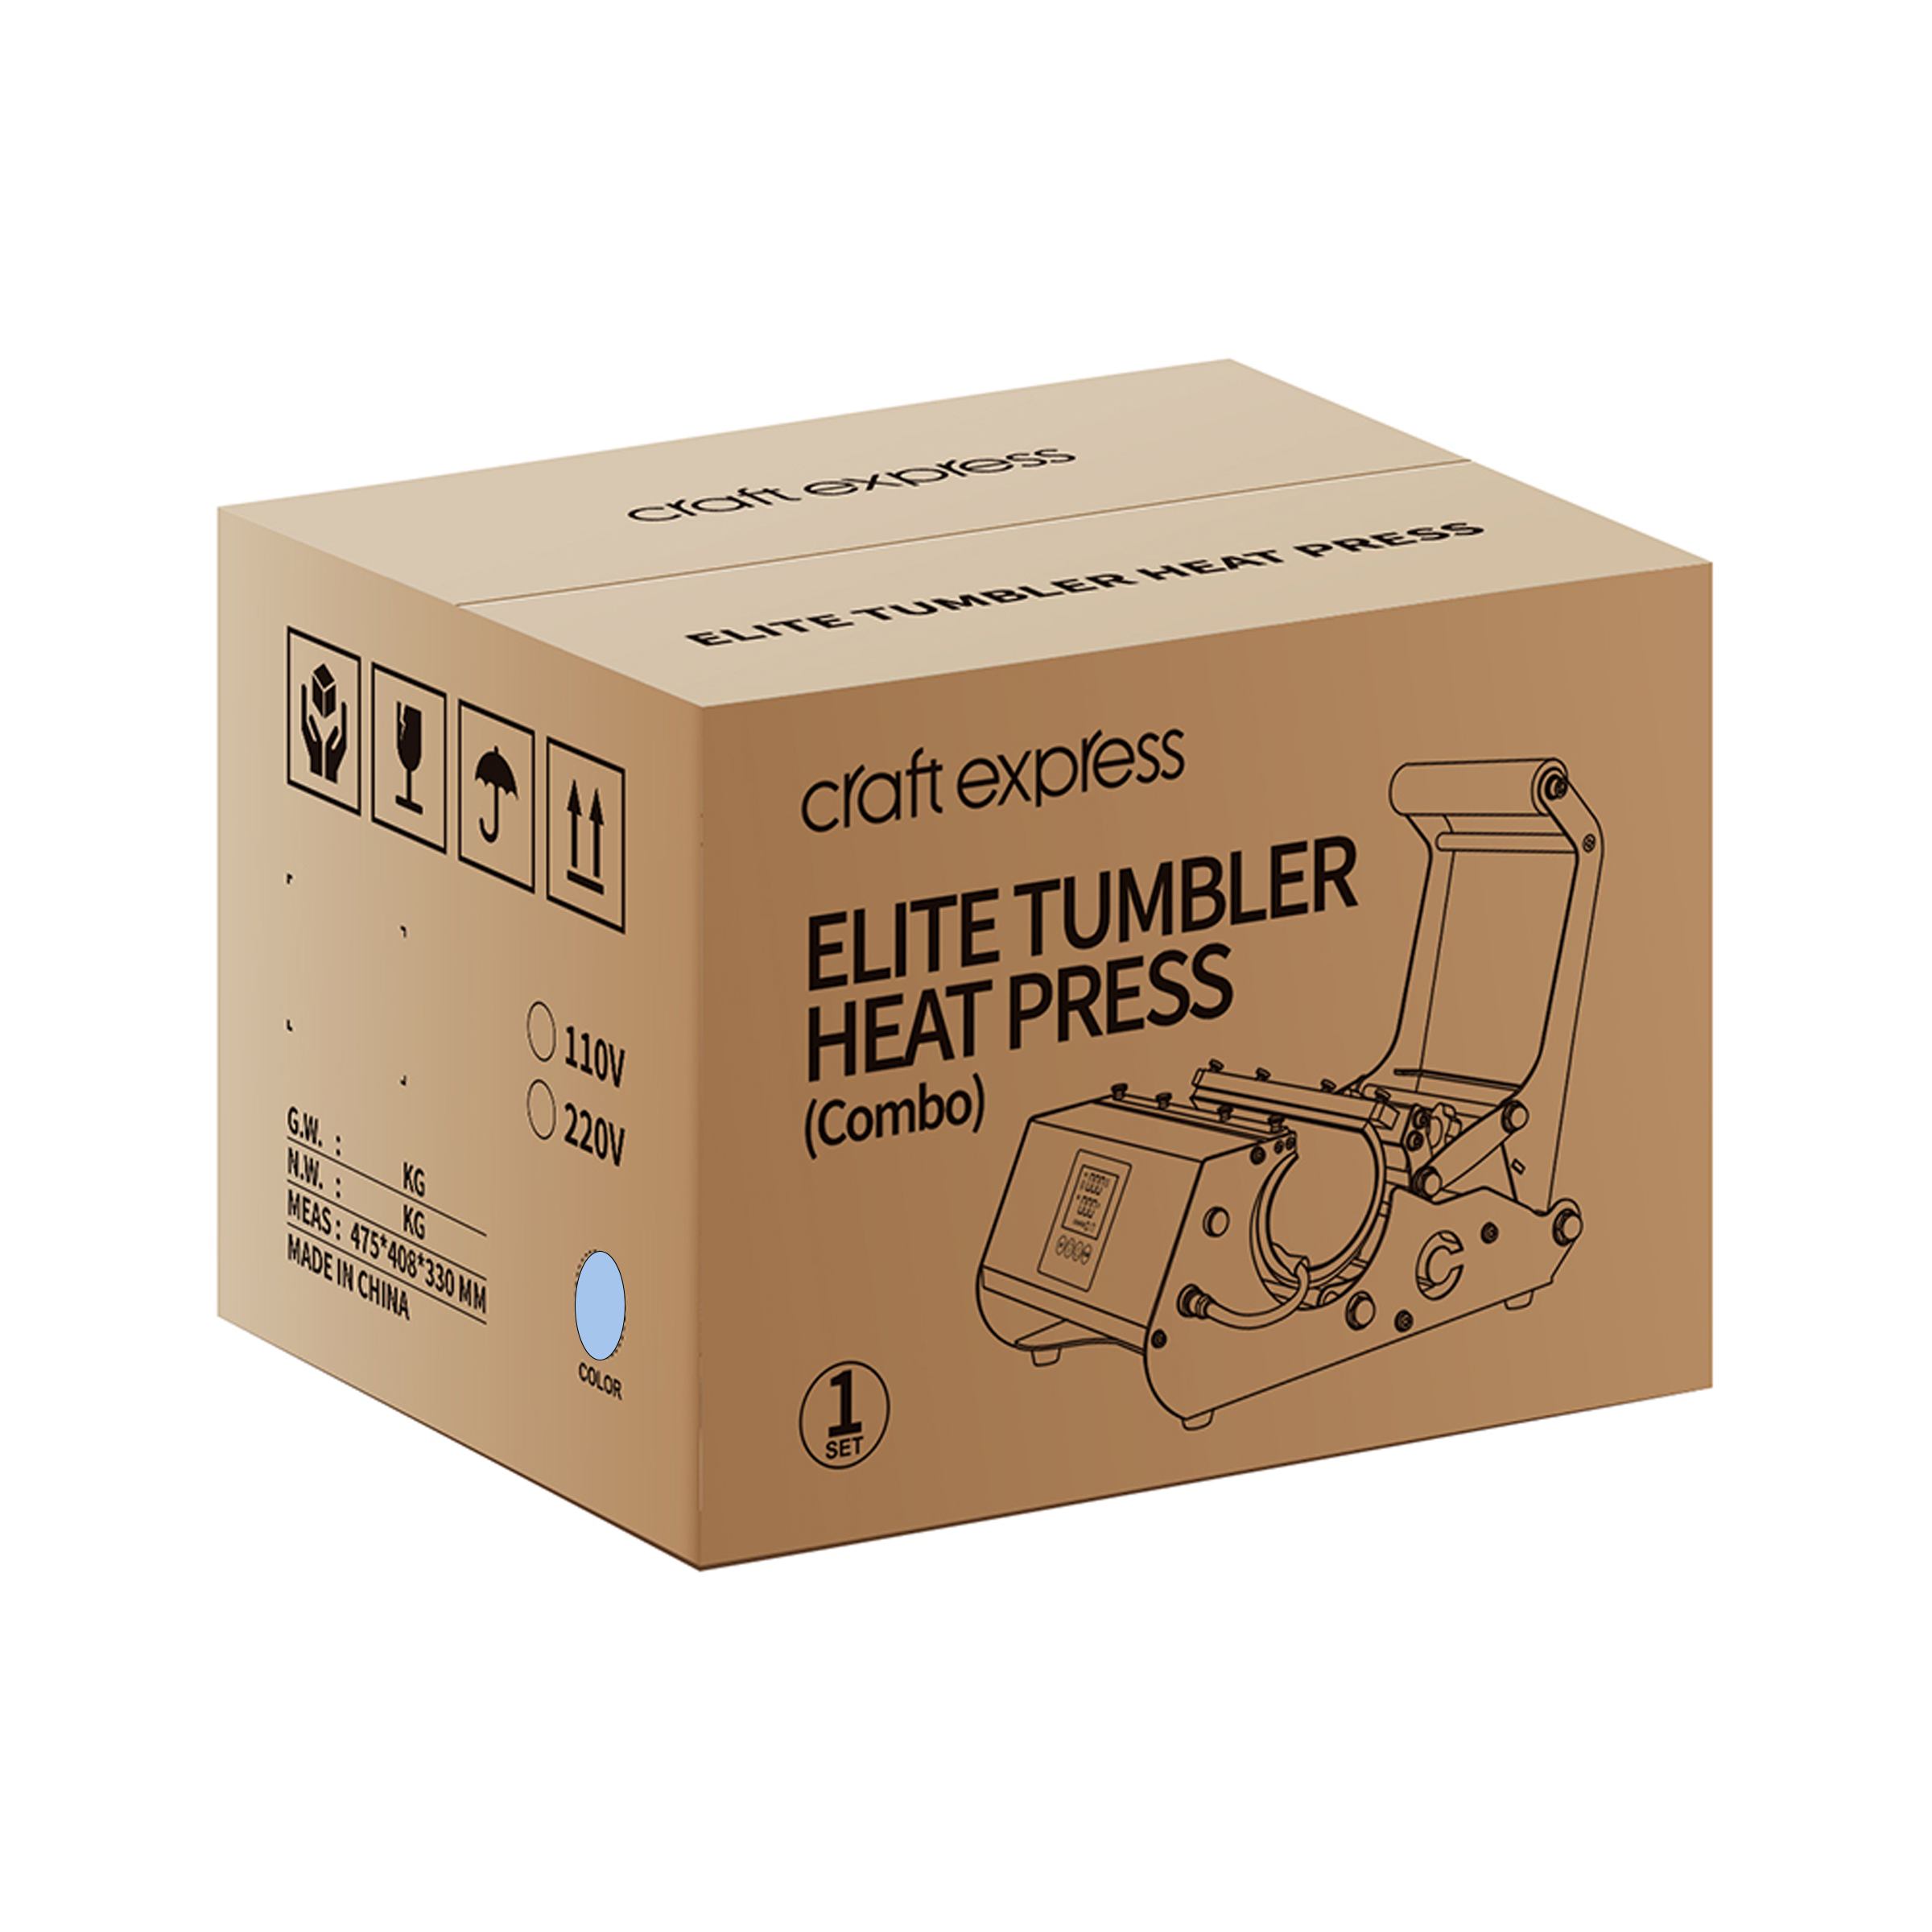 Craft Express Elite Pro Tumbler Heat Press - Perfect for Customizing up to 30oz Tumblers - Artesprix